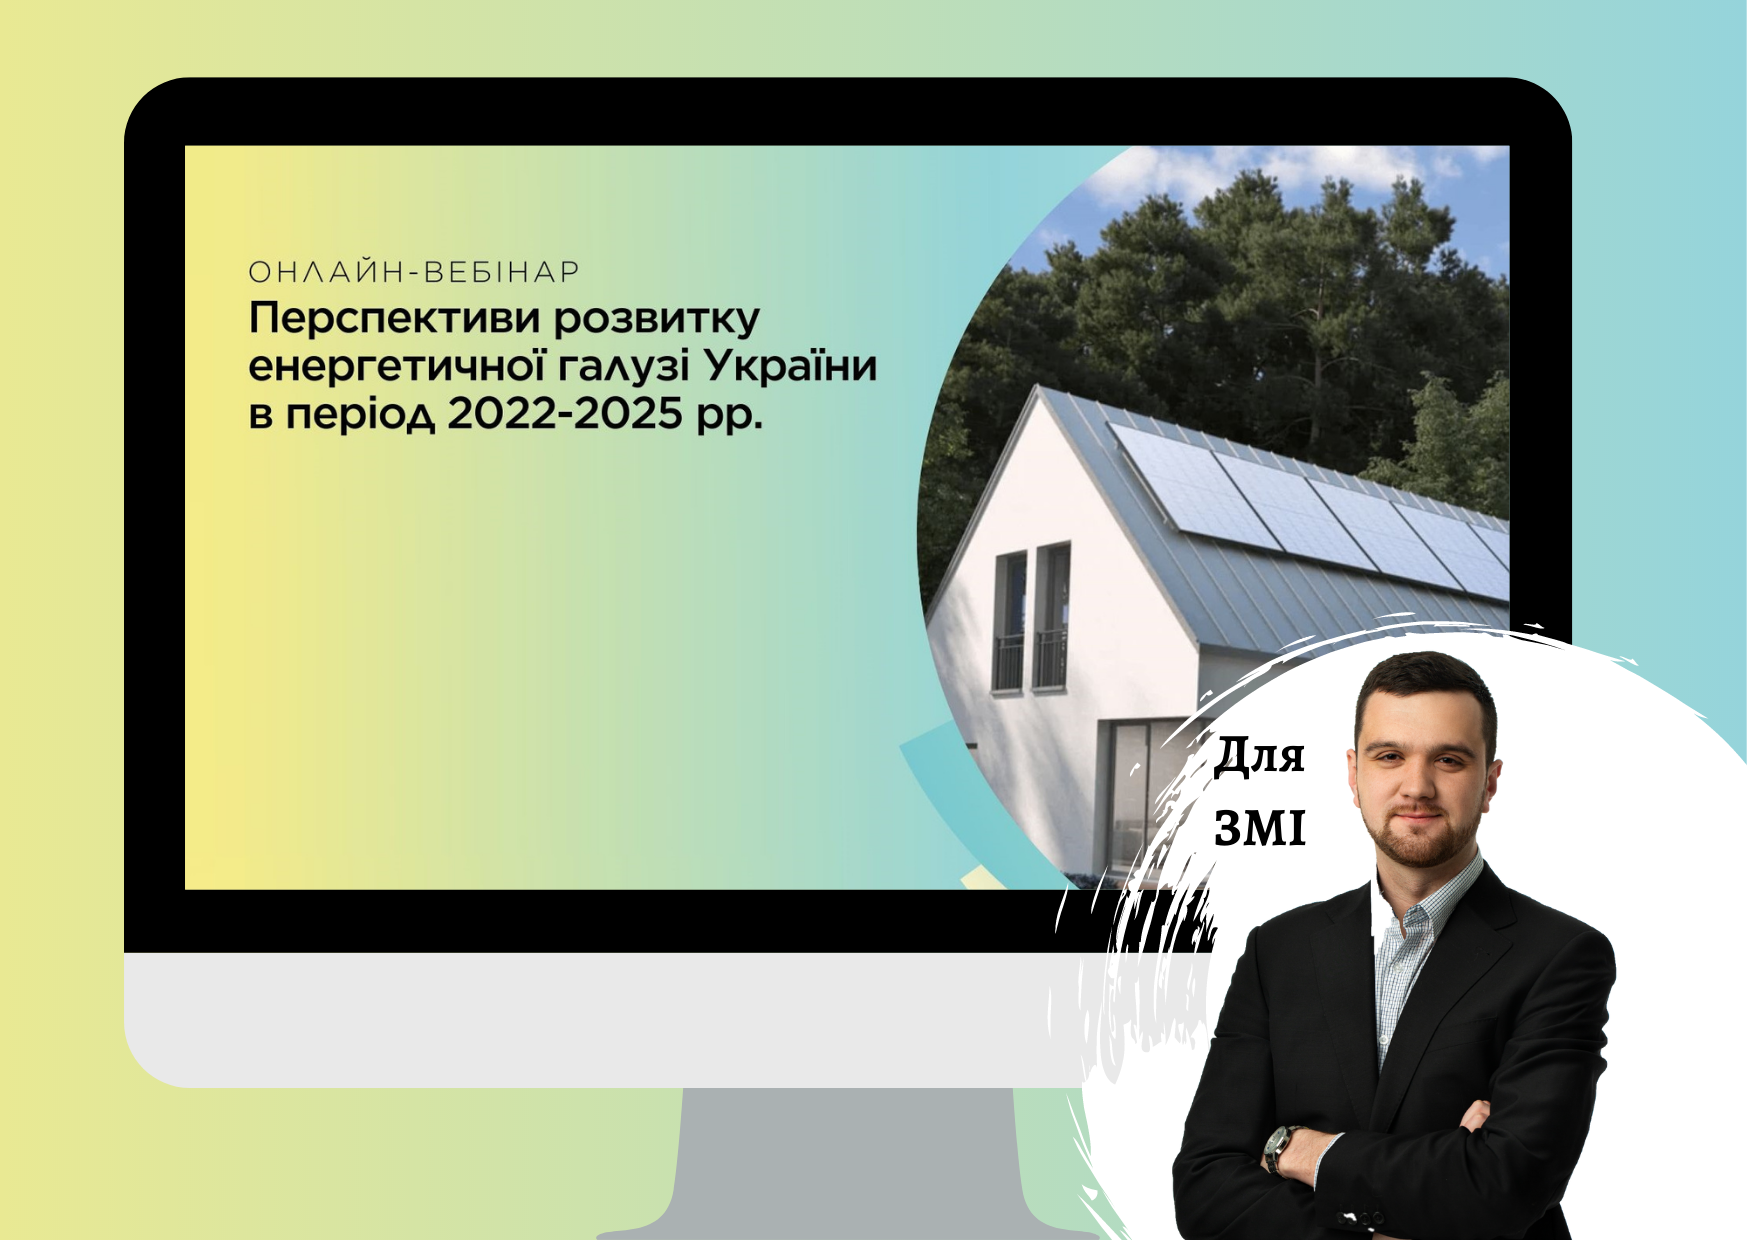 Andrii Mokryakov, Senior Consultant at Pro-Consulting, took part in the webinar 